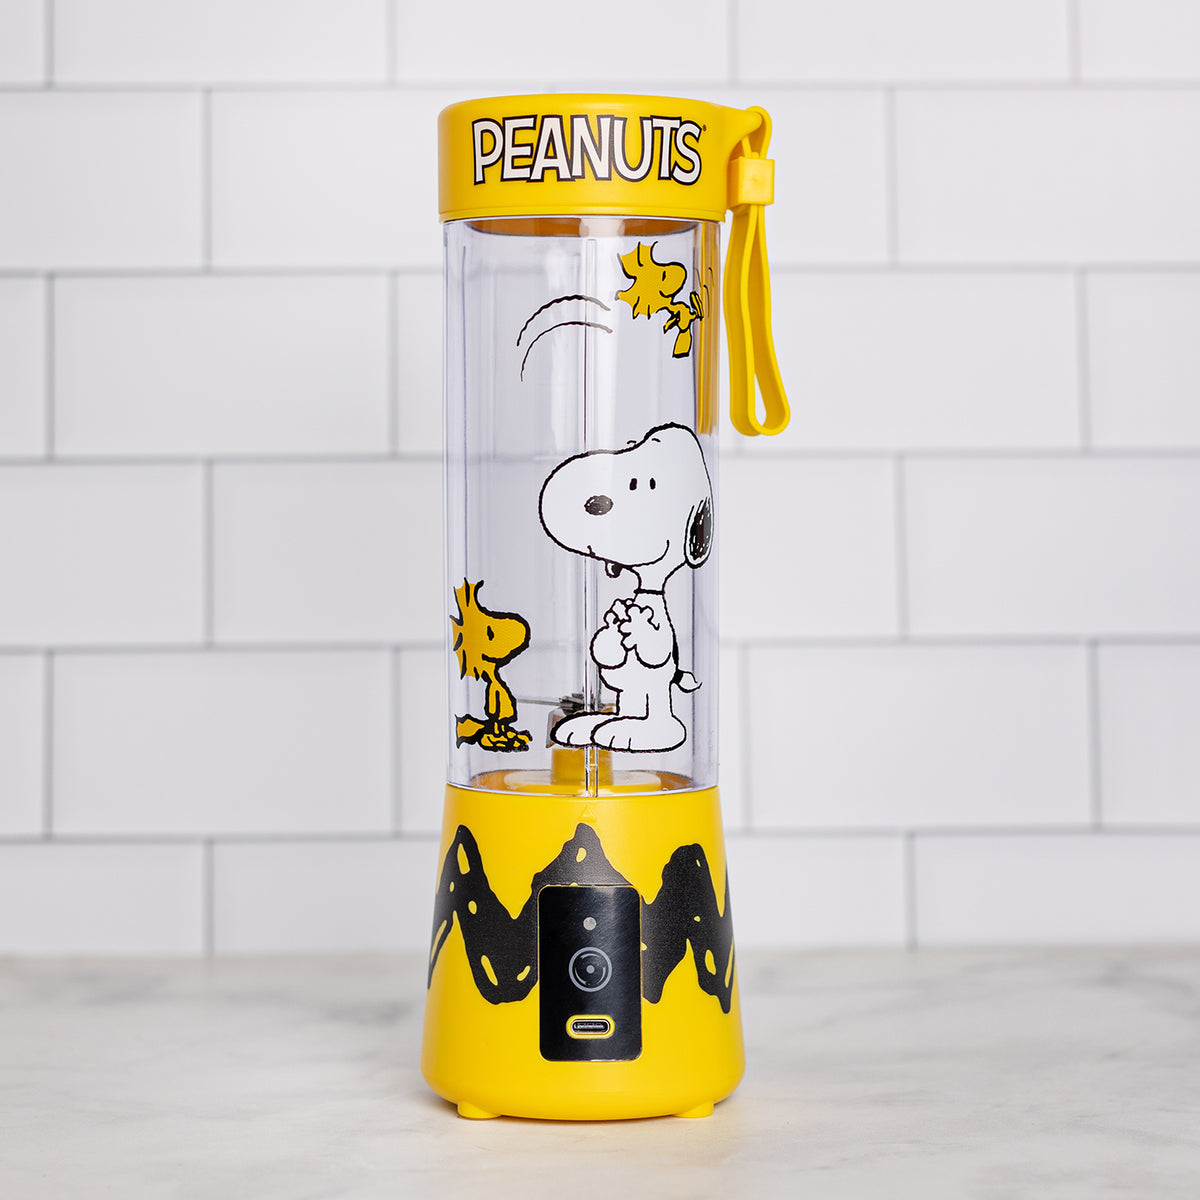 Uncanny Brands Peanuts 2 Quart Slow Cooker- Snoopy & Woodstock Appliance 